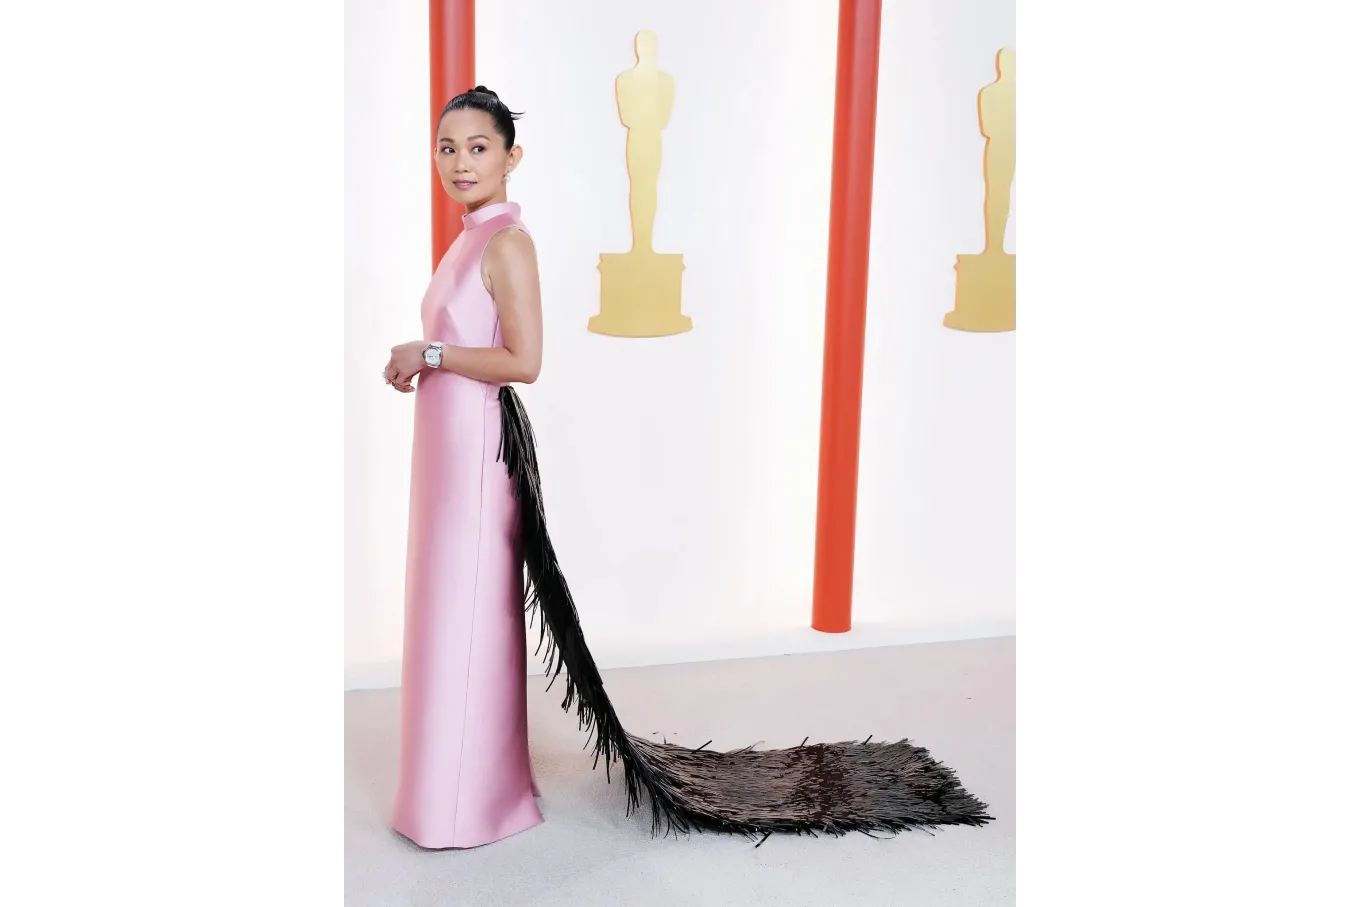 actress Hong Chau wearing a pink sheath dress with black train